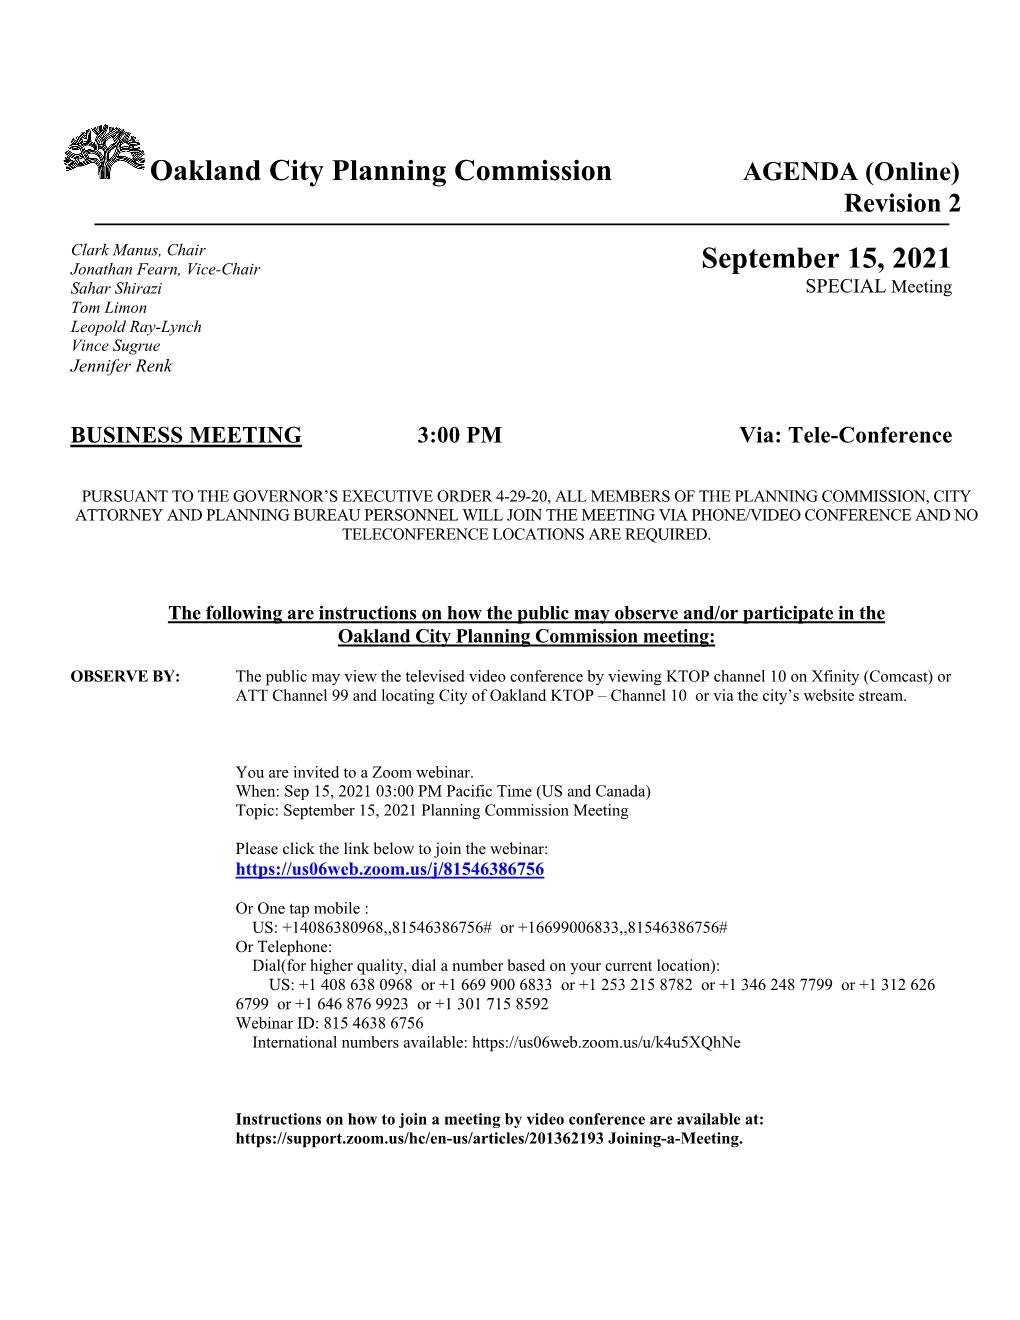 Oakland City Planning Commission September 15, 2021